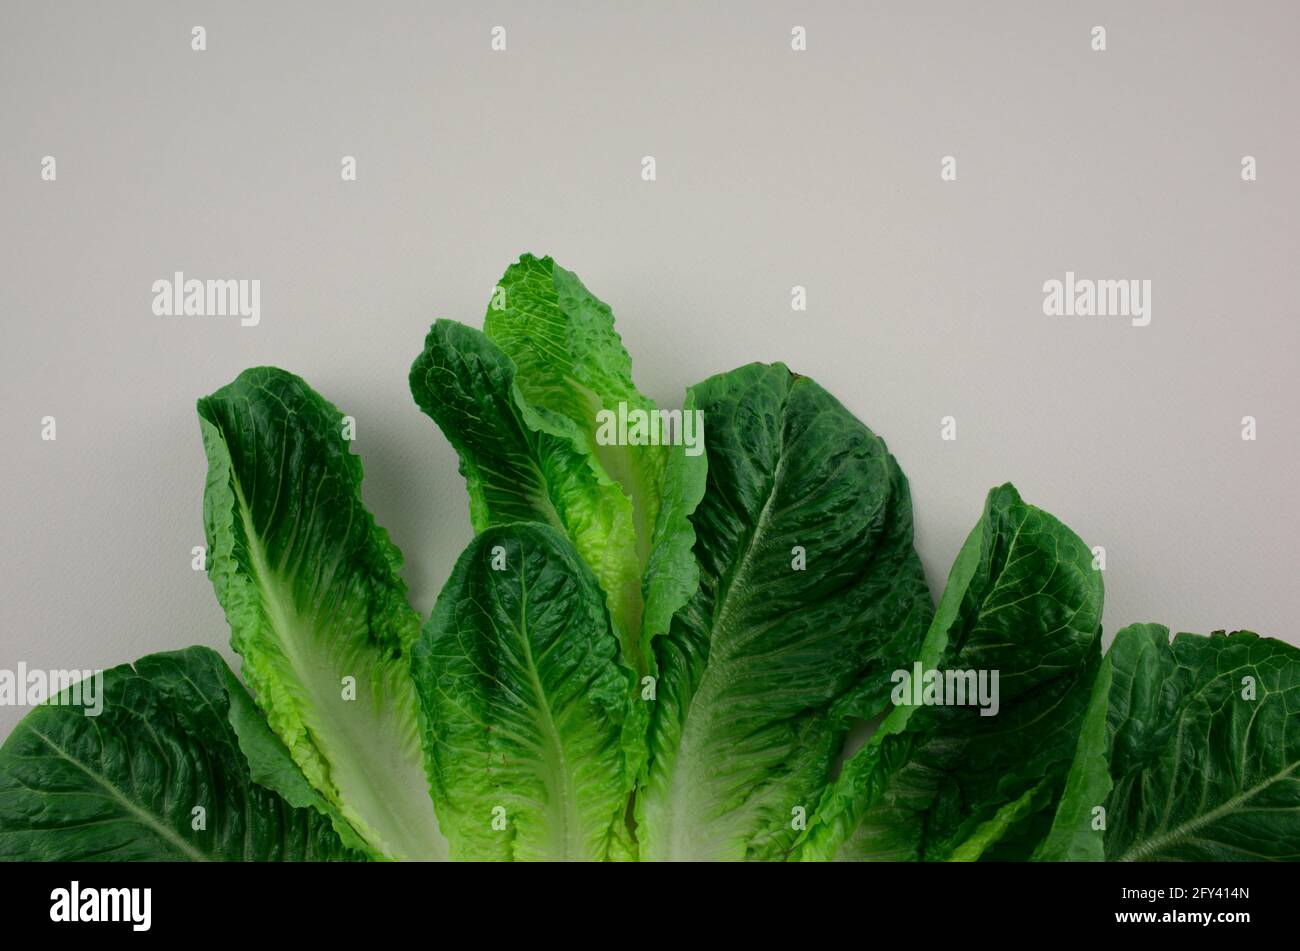 Cos lettuce, Romaine lettuce vegetable arrangement pattern flat lay on grey background. Stock Photo